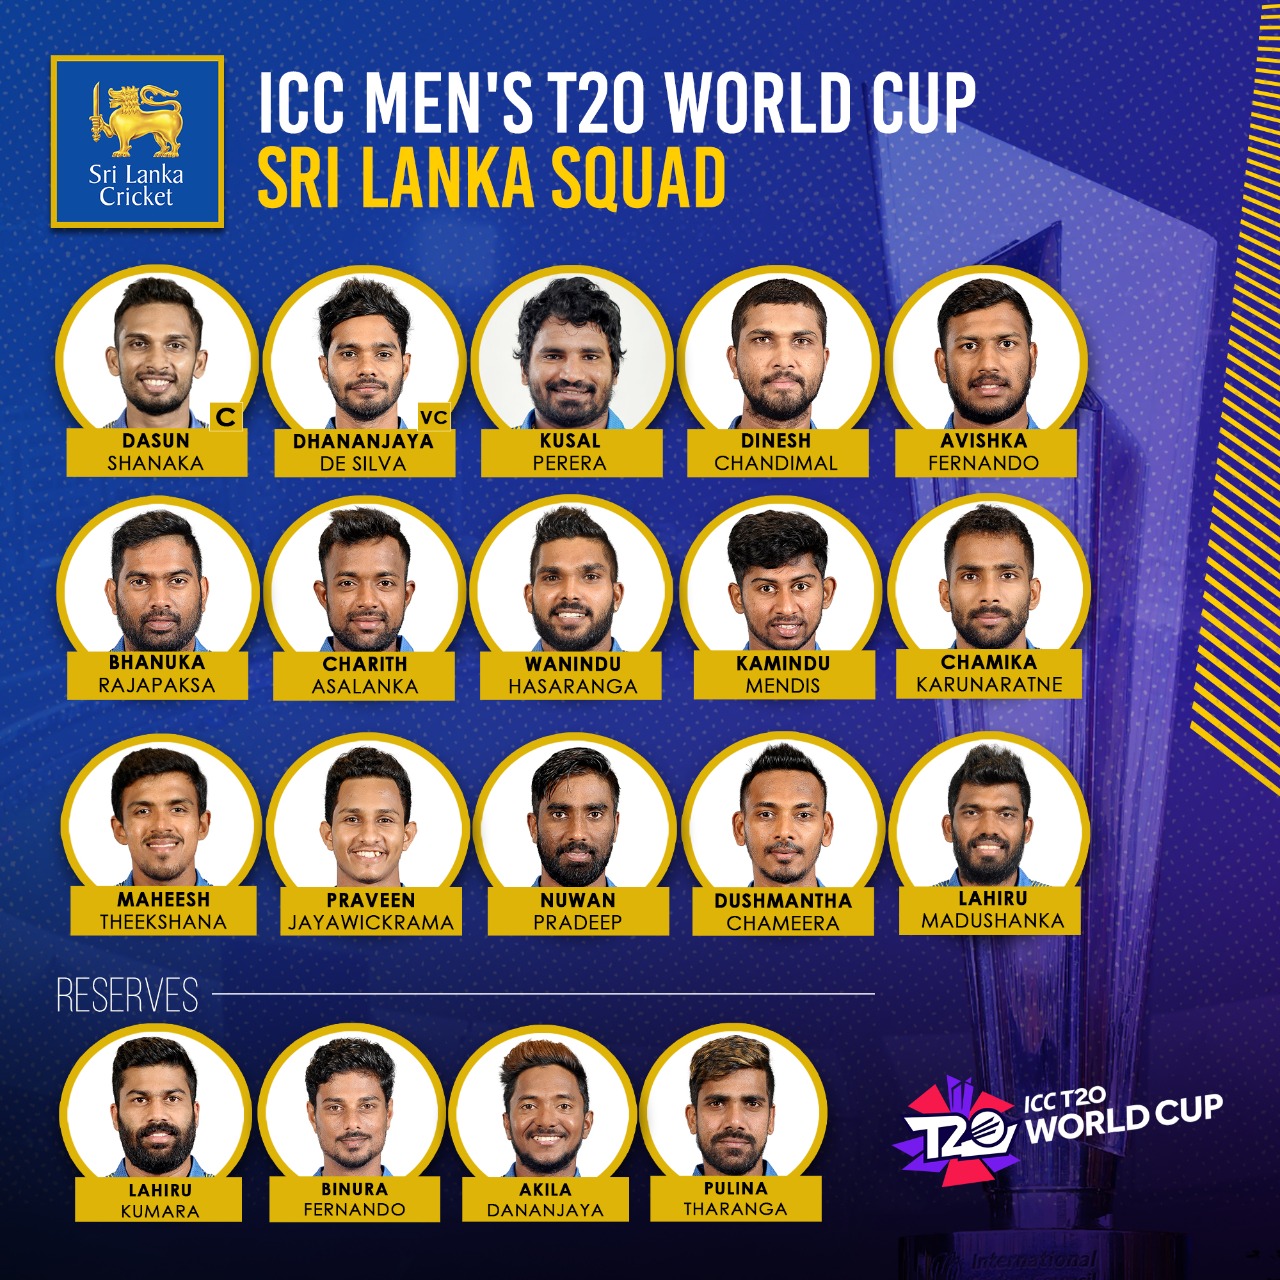 Sri Lanka squad for the ICC Men's T20 World Cup 2021 Sri Lanka Cricket